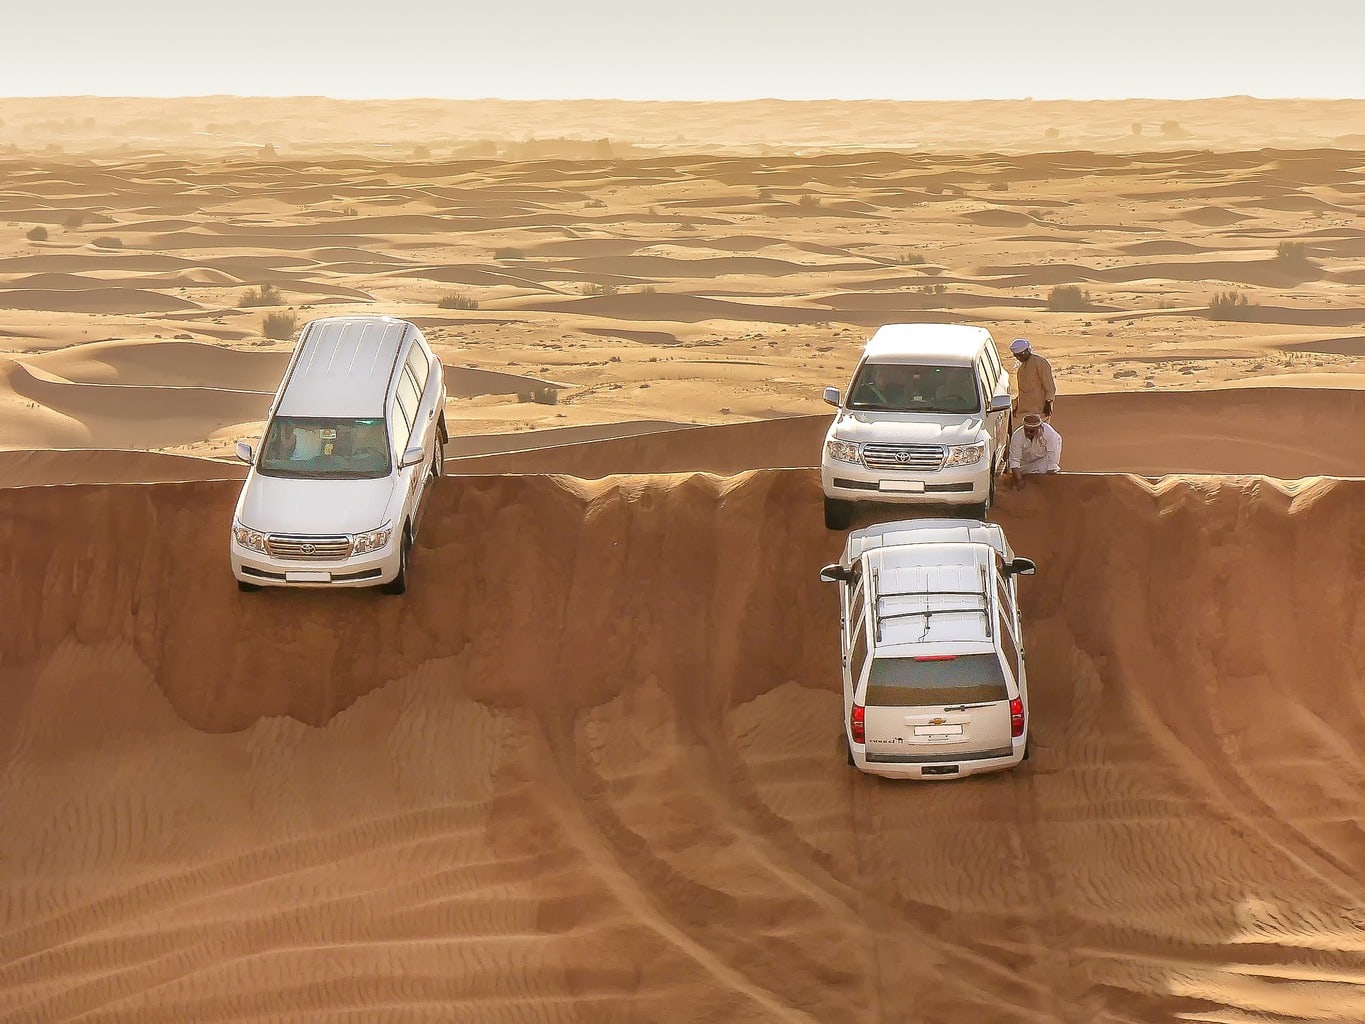 Cars on a desert safari